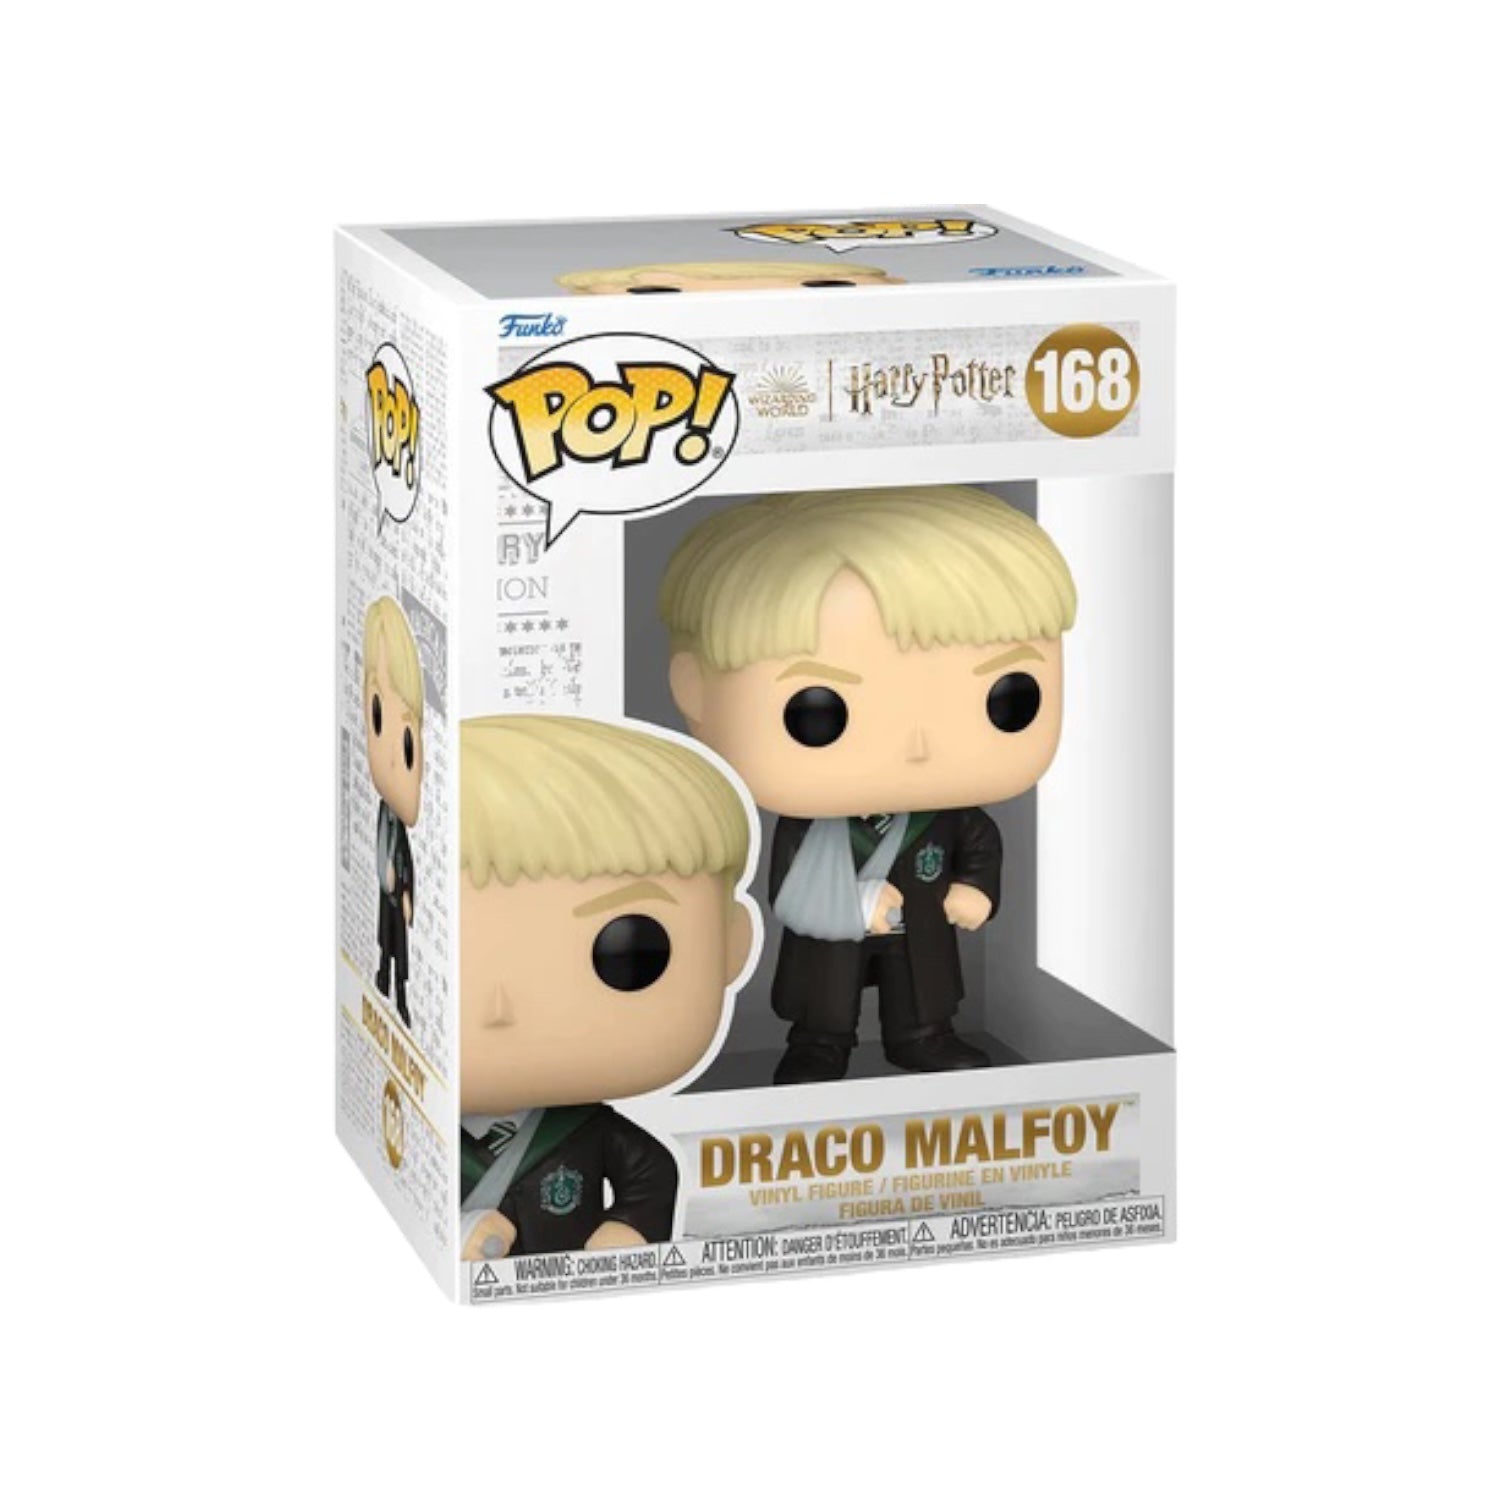 Draco Malfoy #168 Funko Pop! Harry Potter - PREORDER